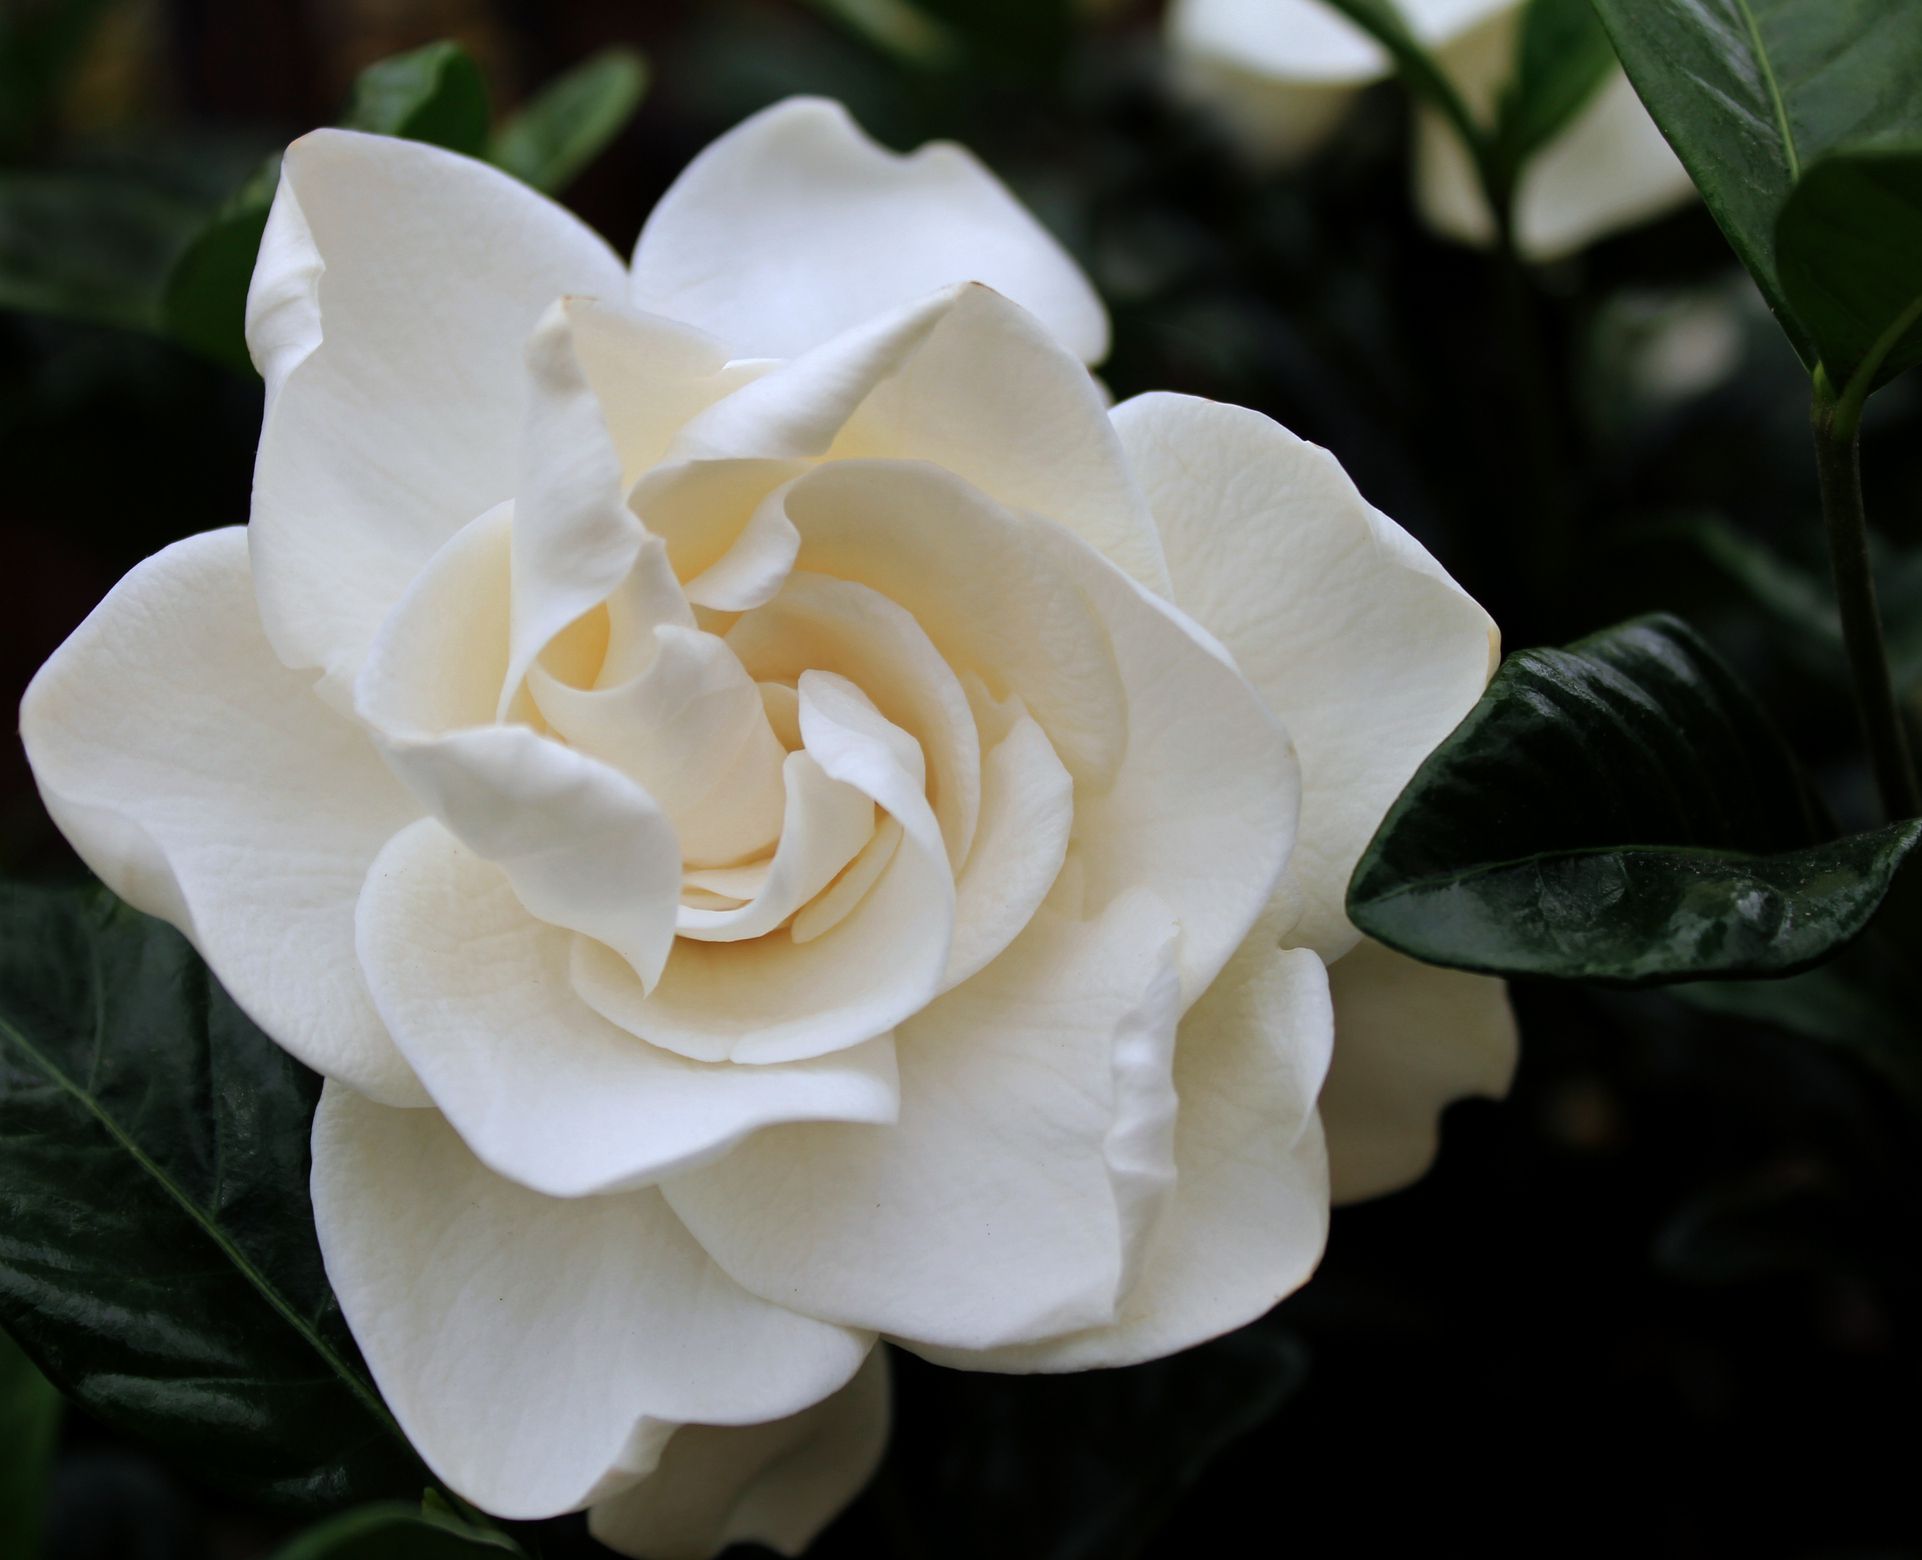 Gardenia Meaning: Love, Purity and Hidden Desires